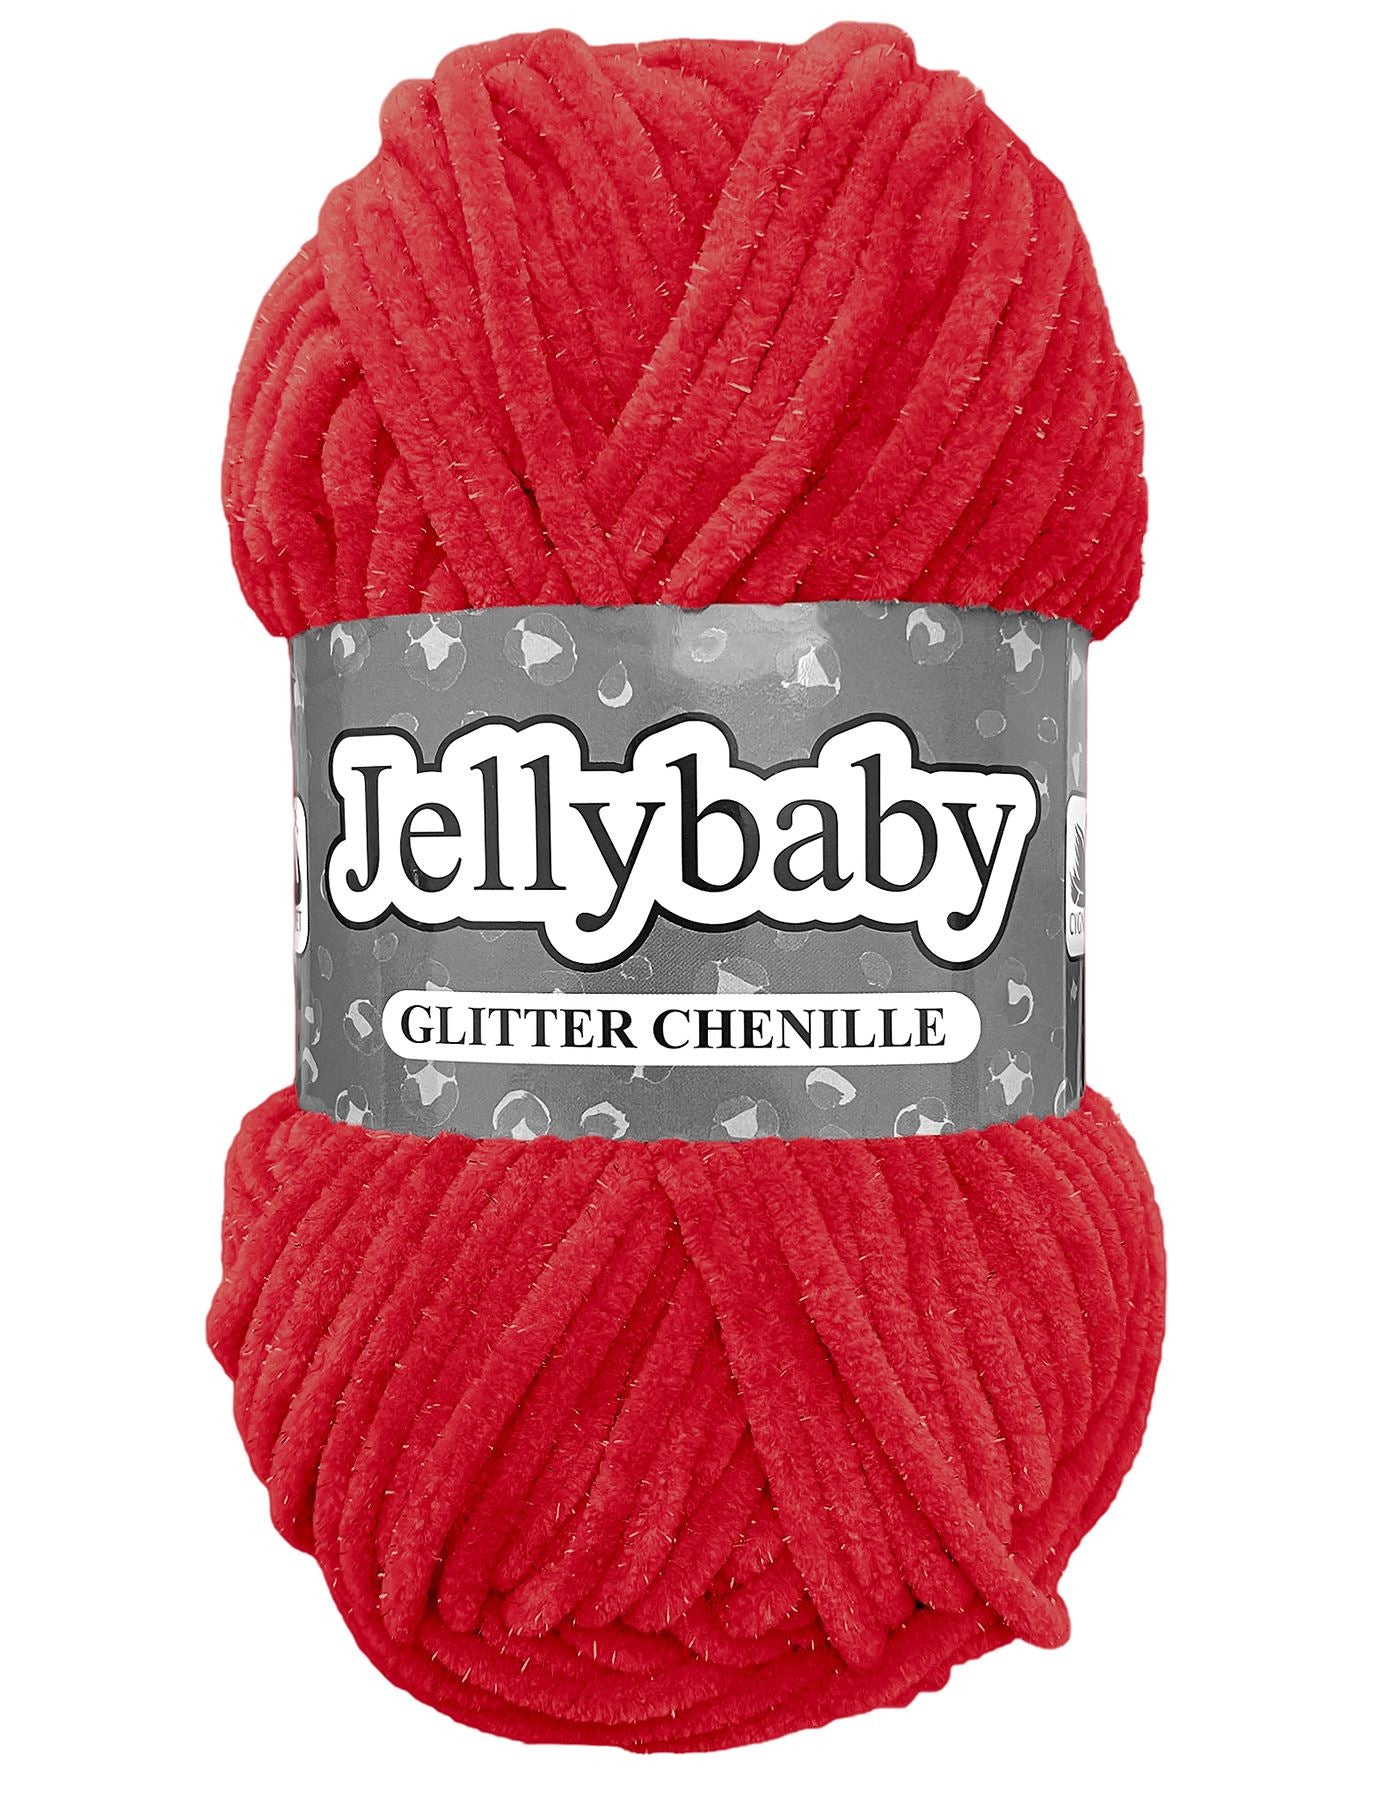 Cygnet Jellybaby Glitter Chenille Firecracker (016) -100g